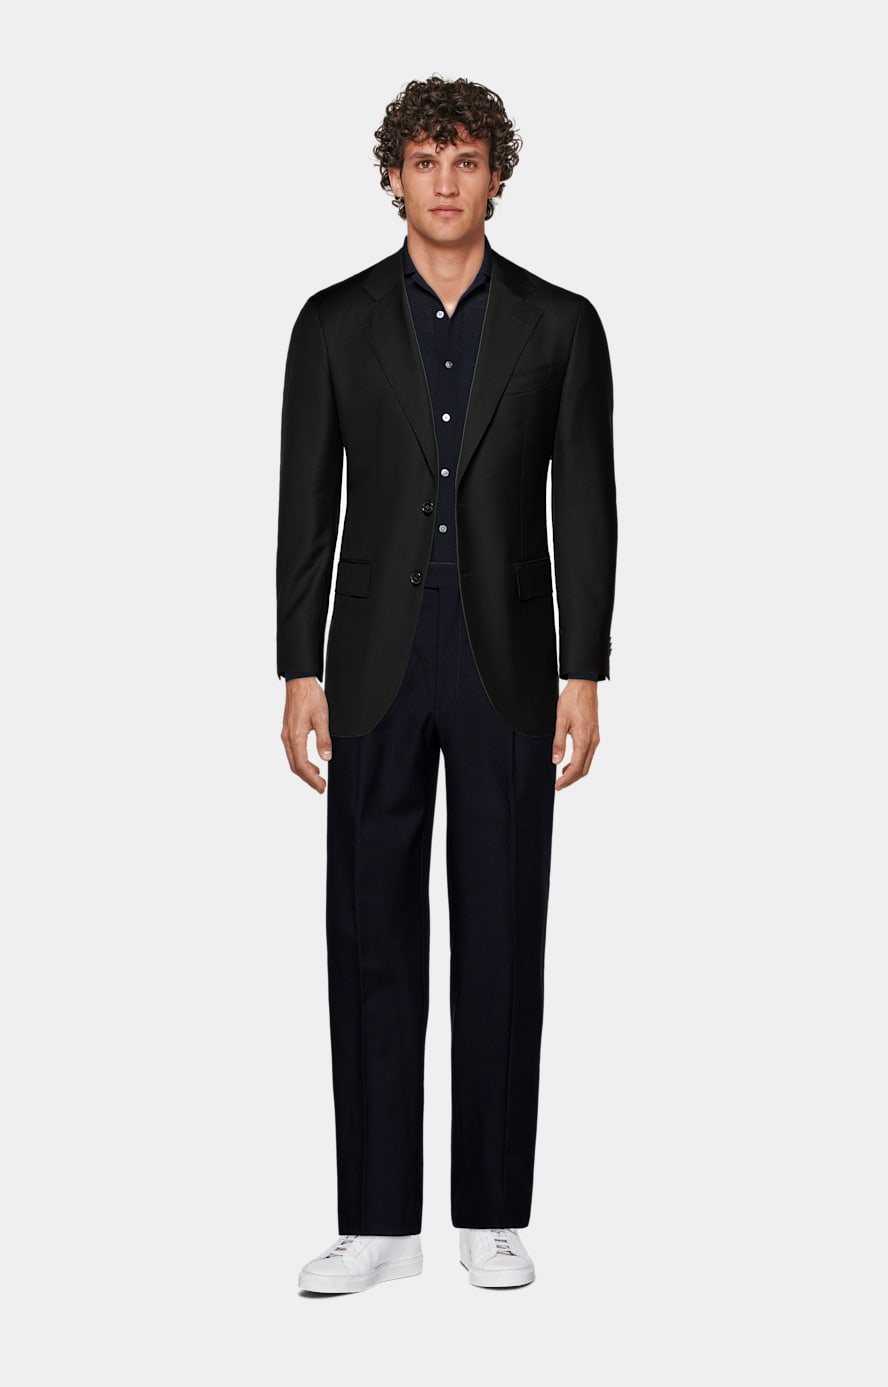 Black Tailored Fit Havana Suit Jacket